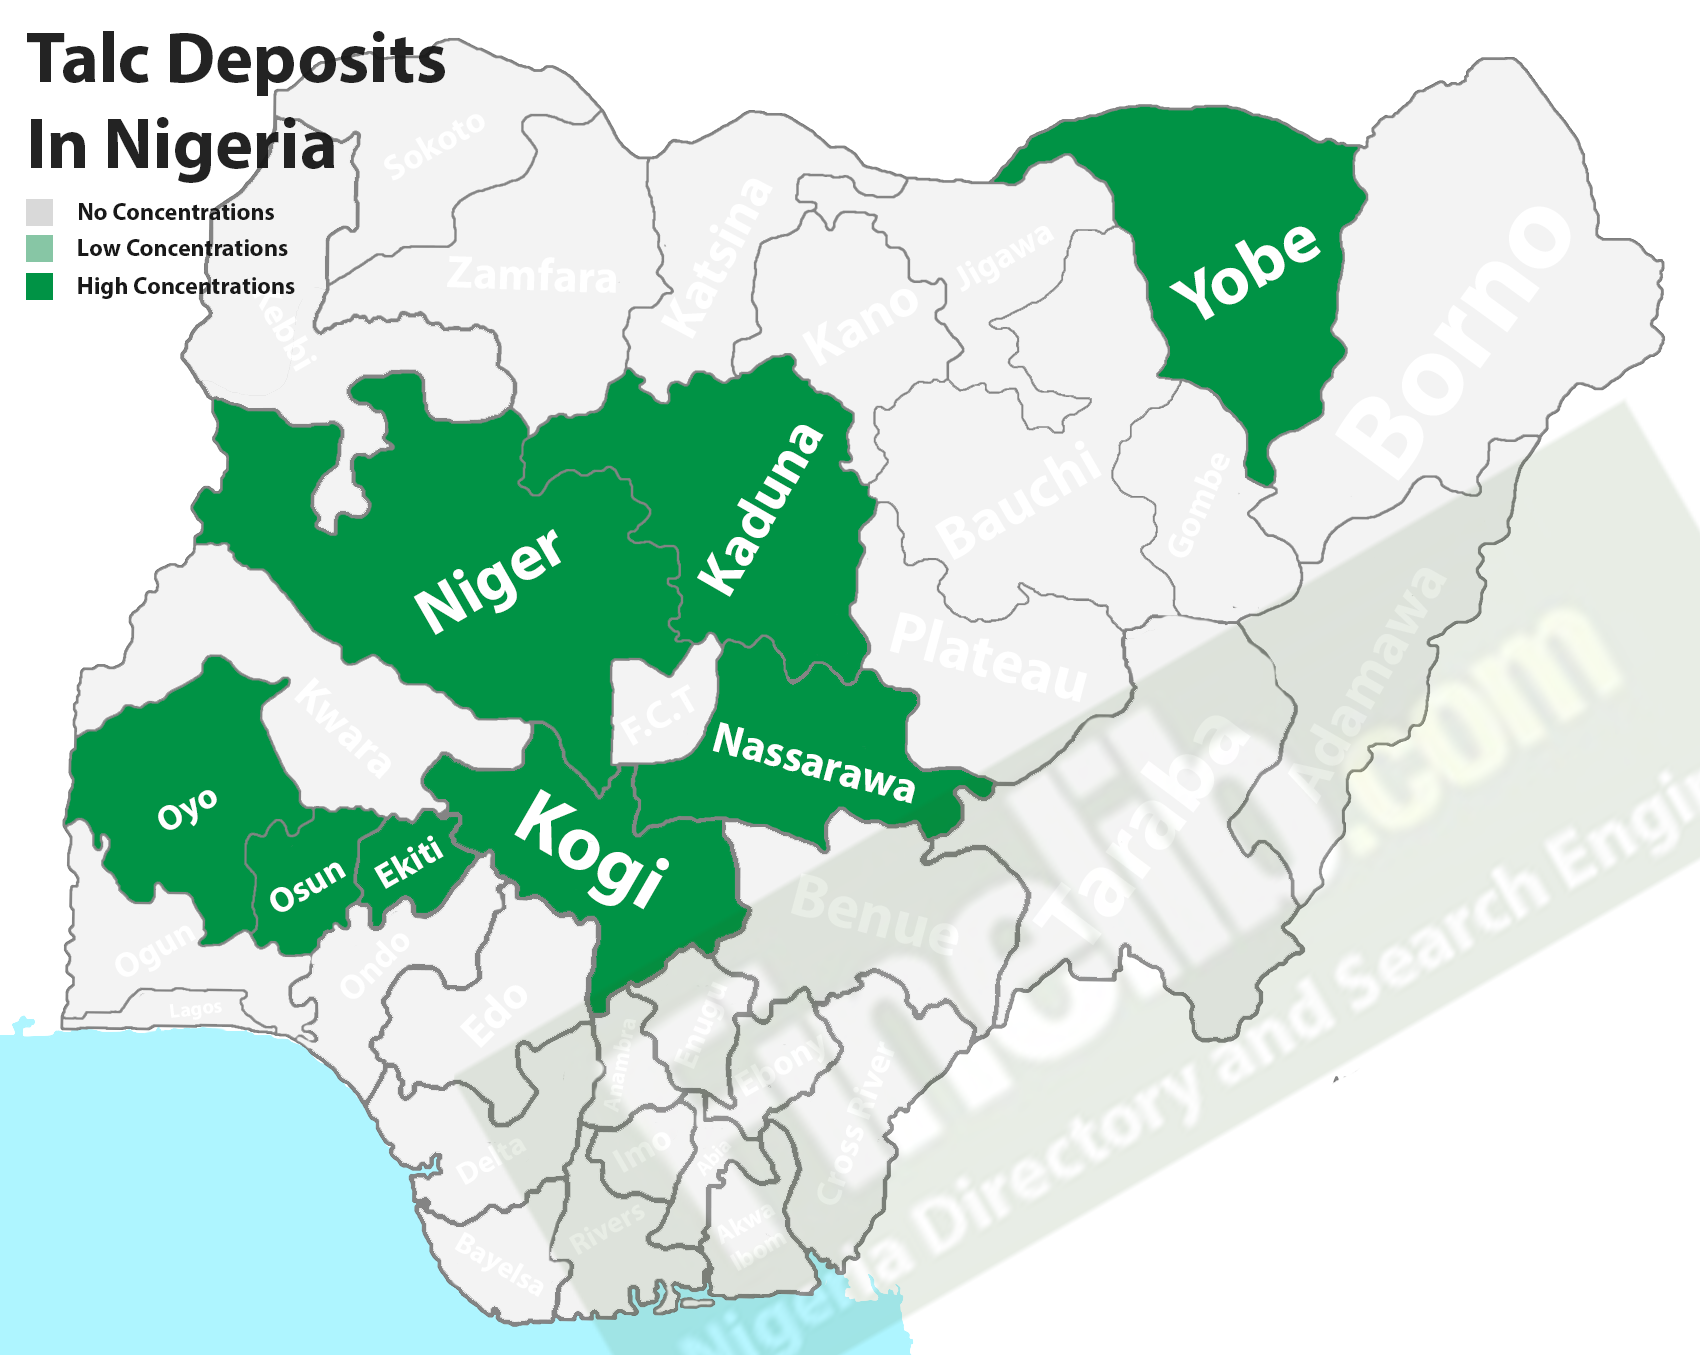 Talc deposits in Nigeria